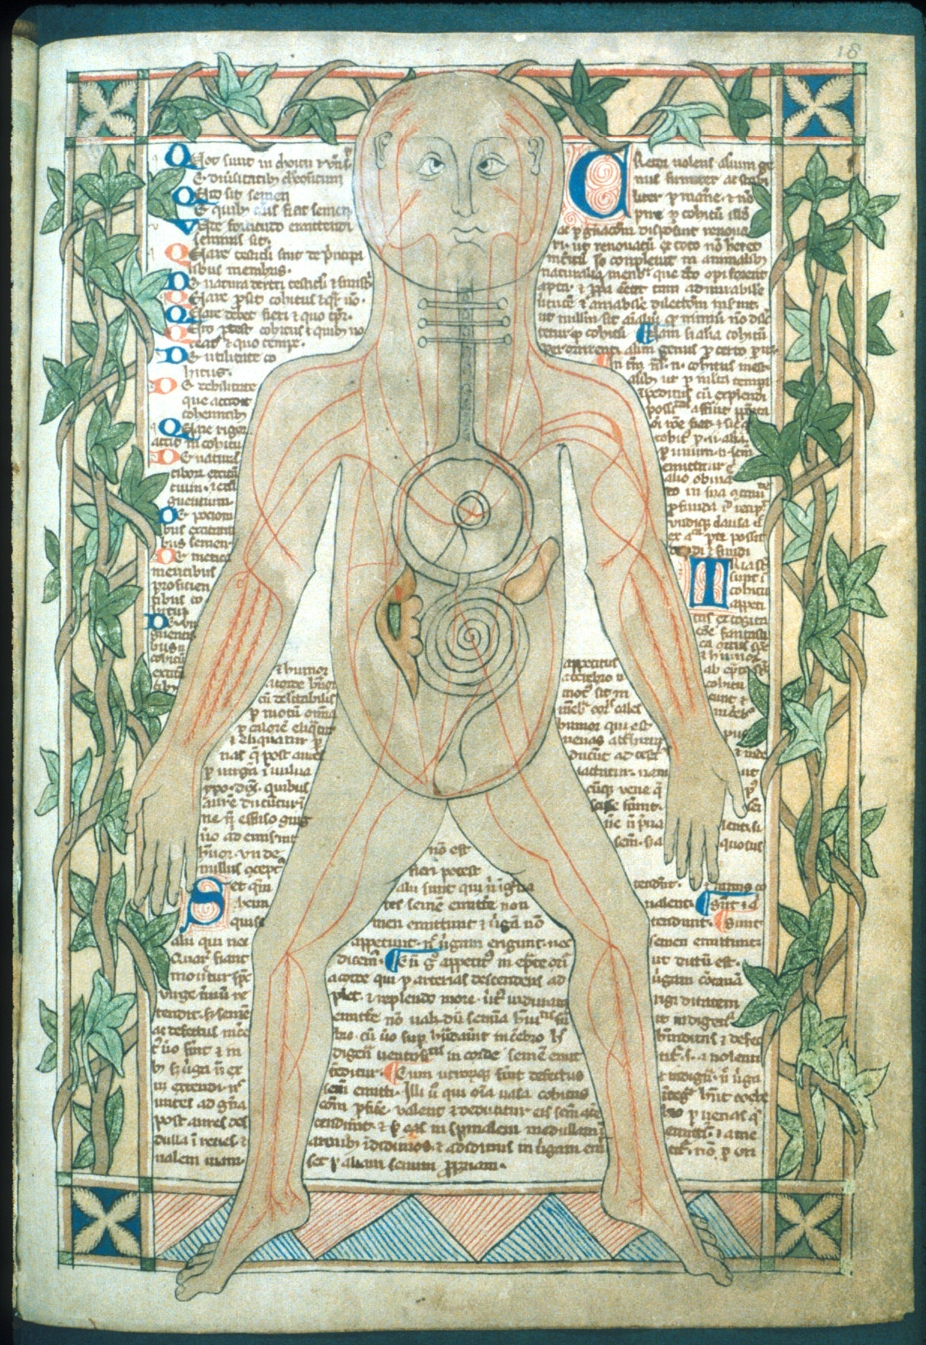 13th century medical miscellany